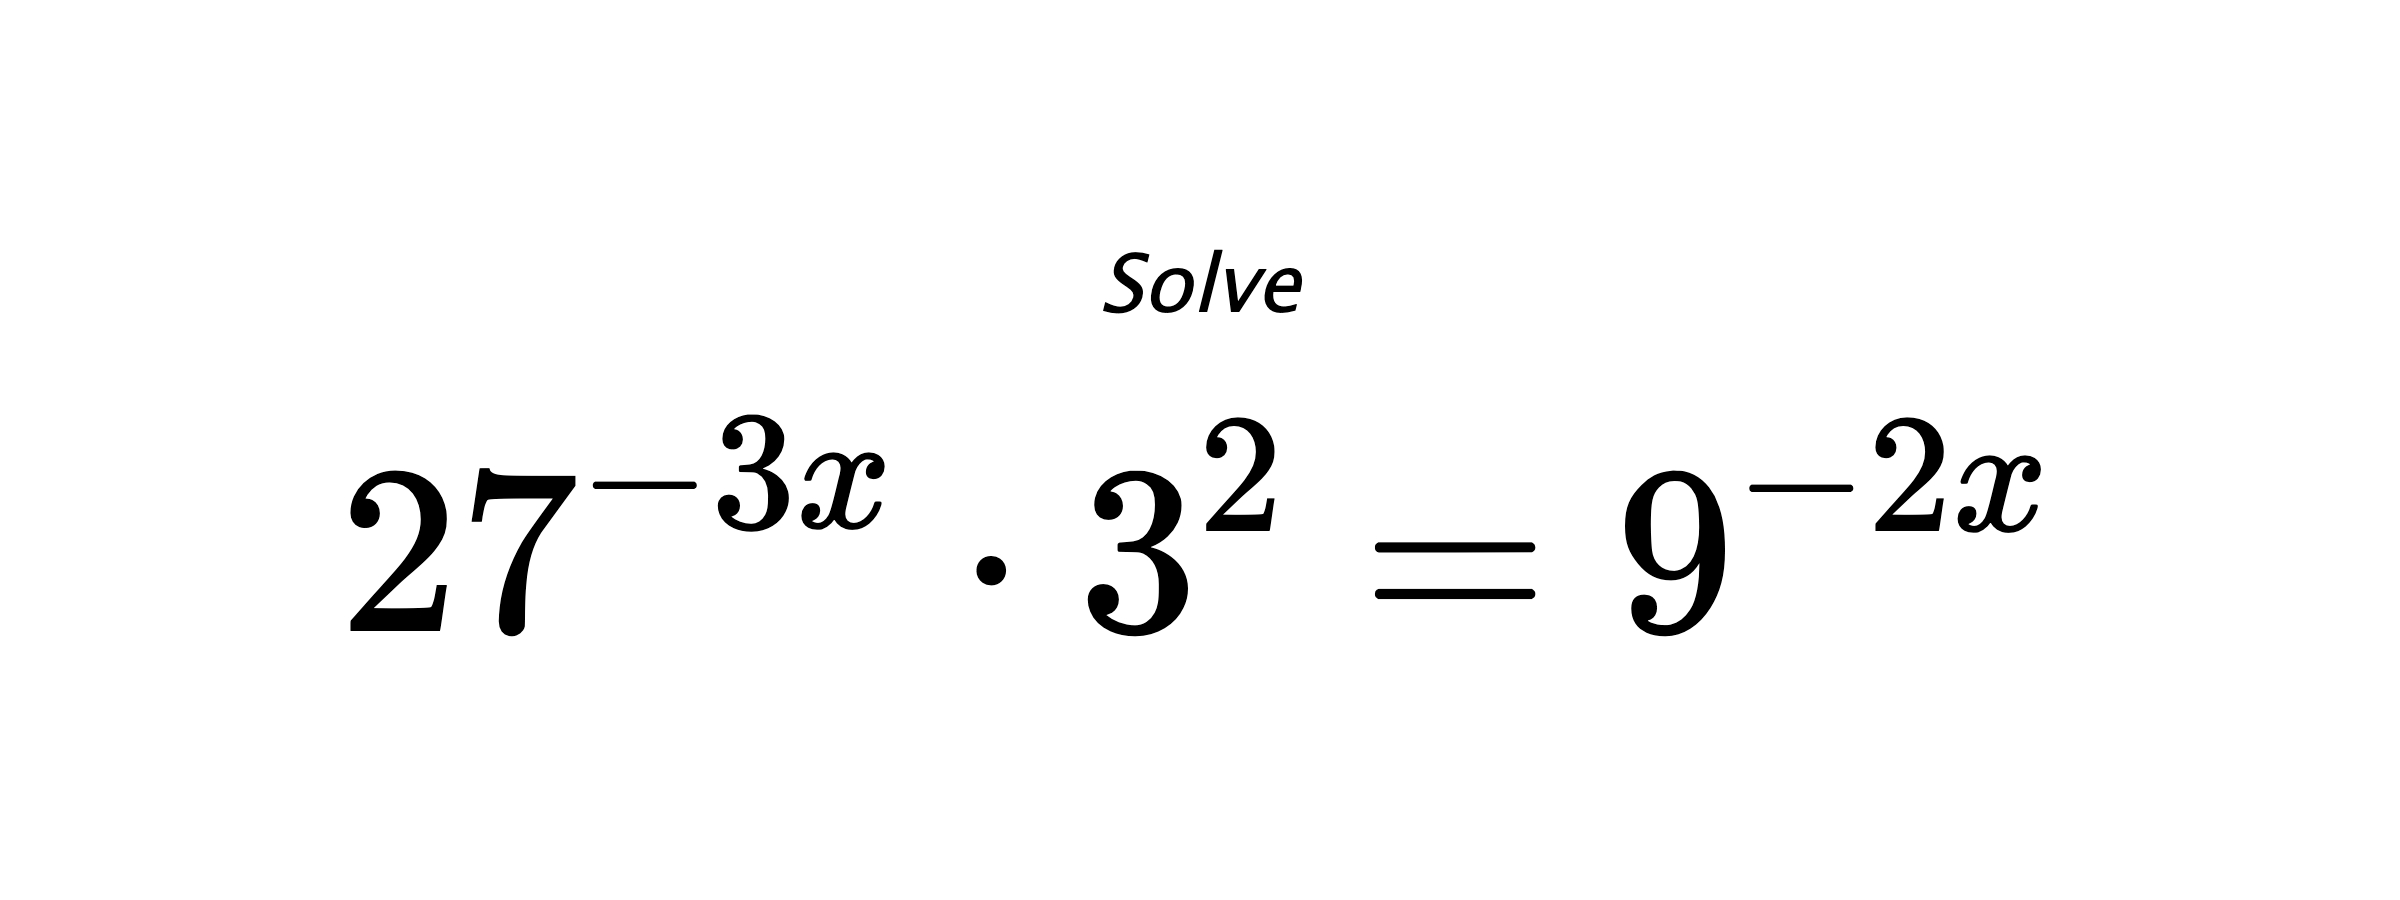 Solve $ 27^{-3x} \cdot 3^{2} = 9^{-2x} $